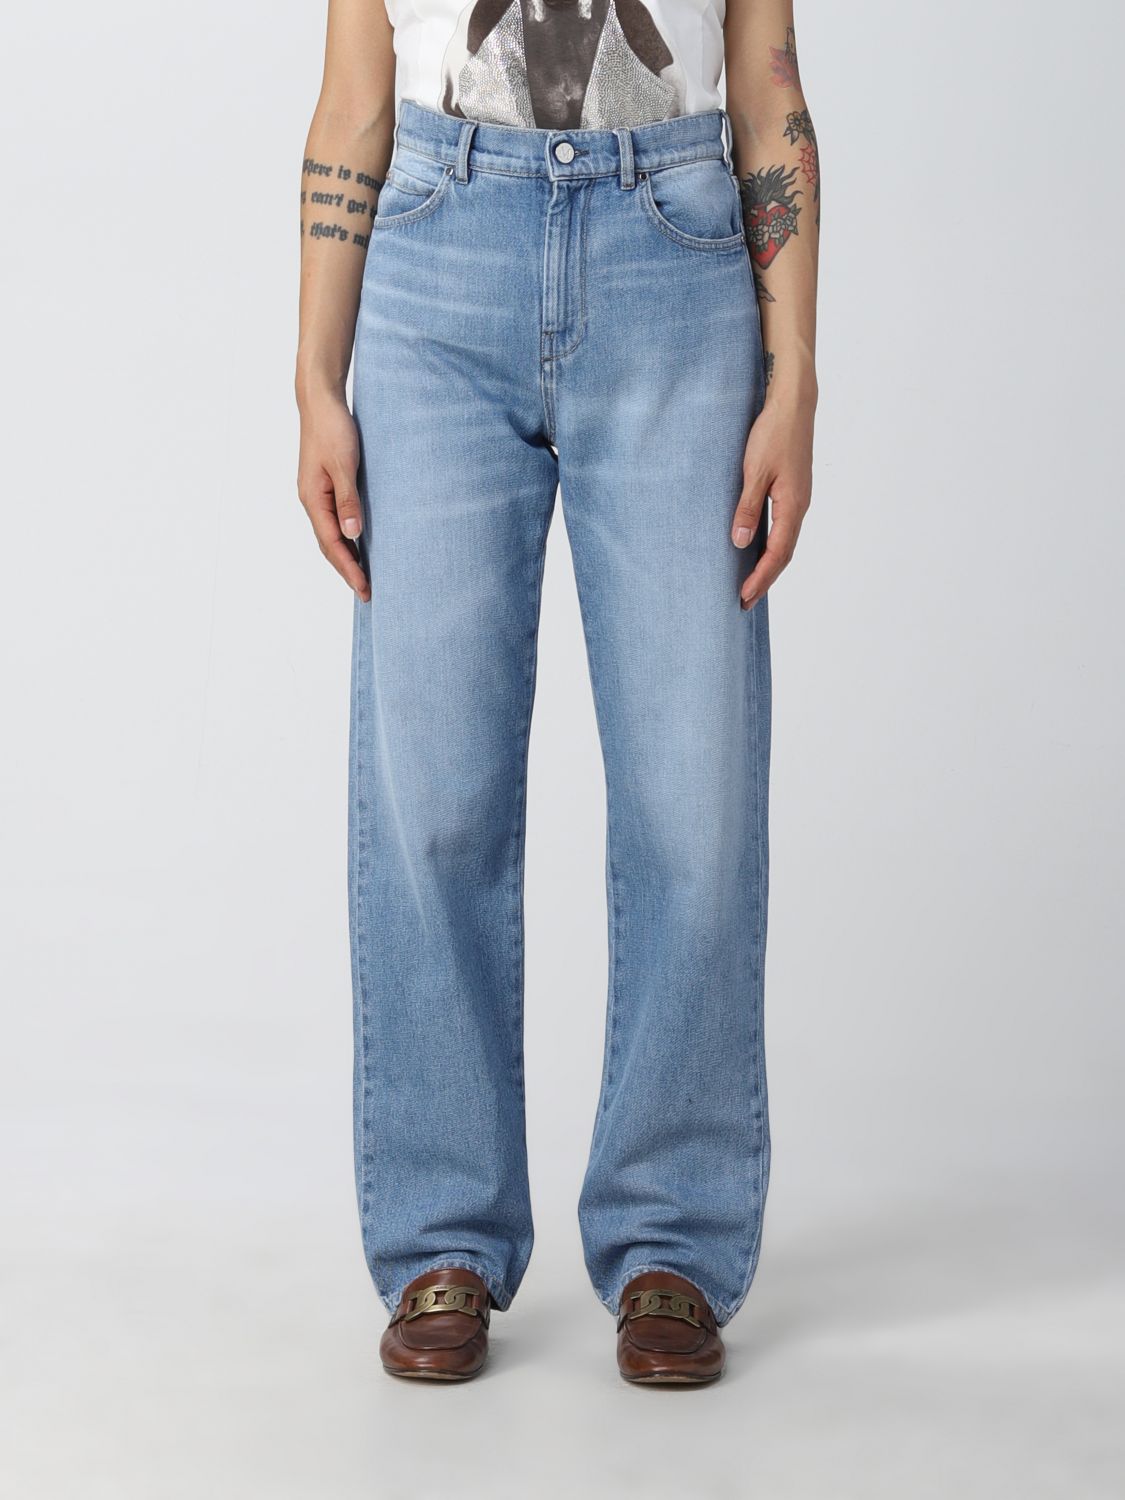 Jeans Max Mara: Max Mara jeans for women gnawed blue 1